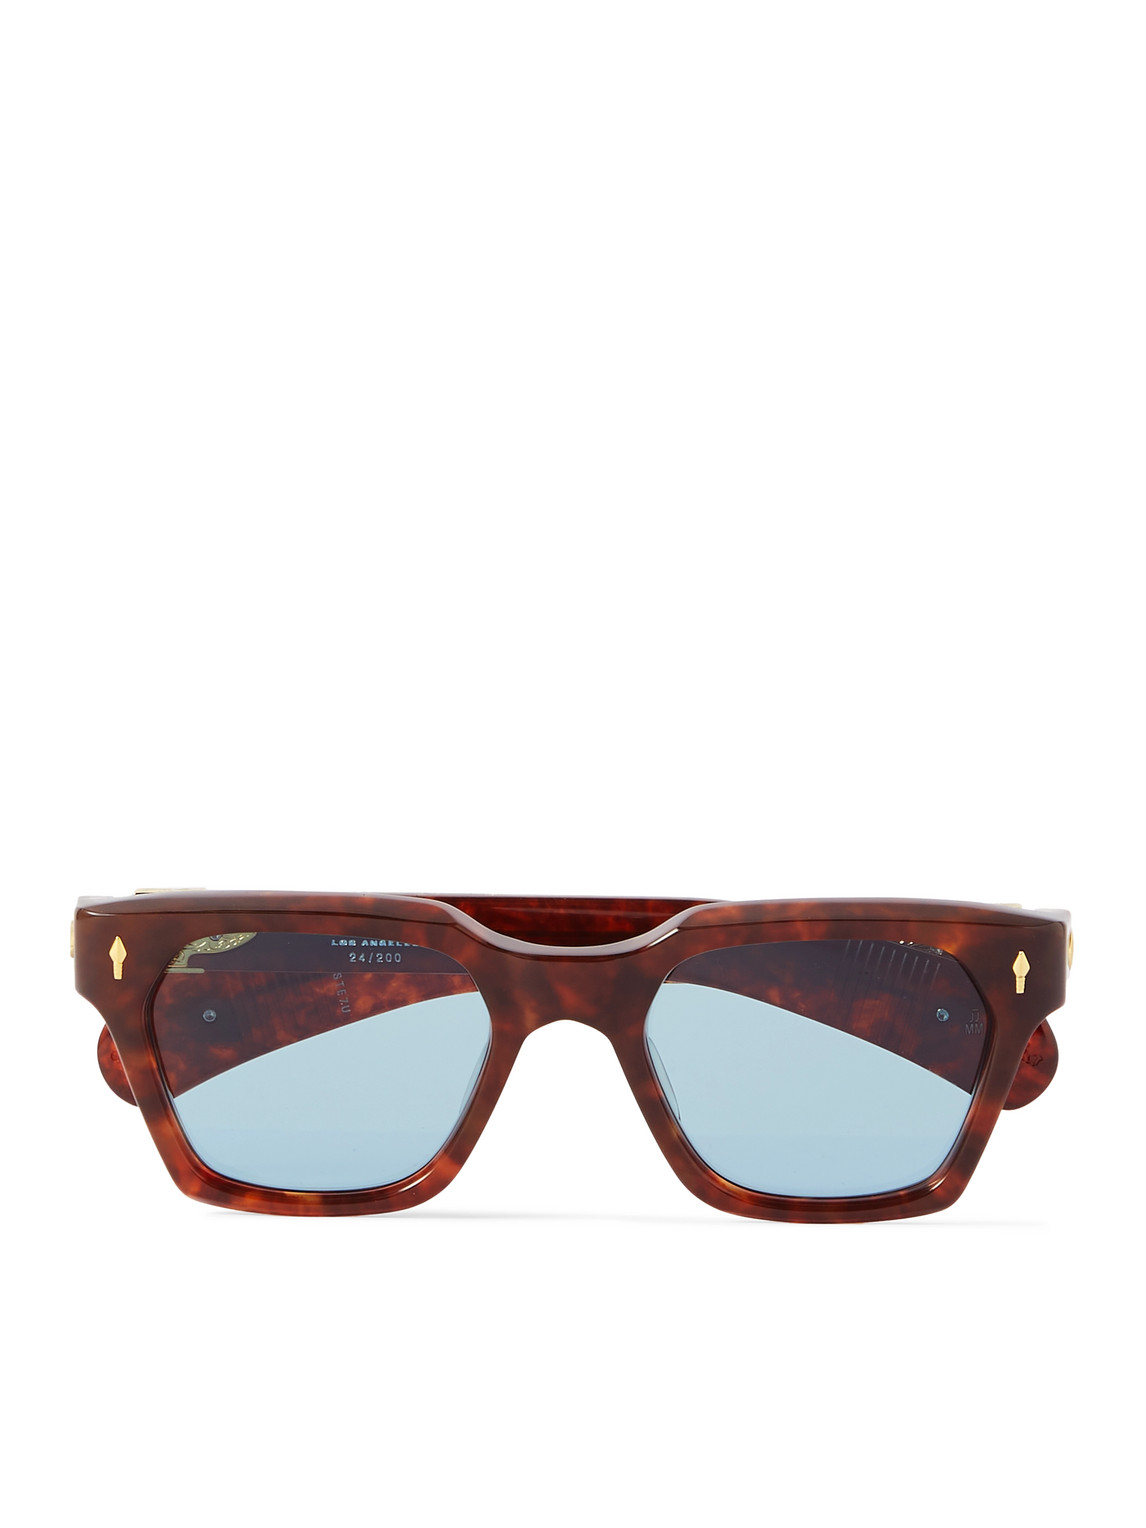 Jacques Marie Mage Sterett D-frame Tortoiseshell Acetate Sunglasses In Brown